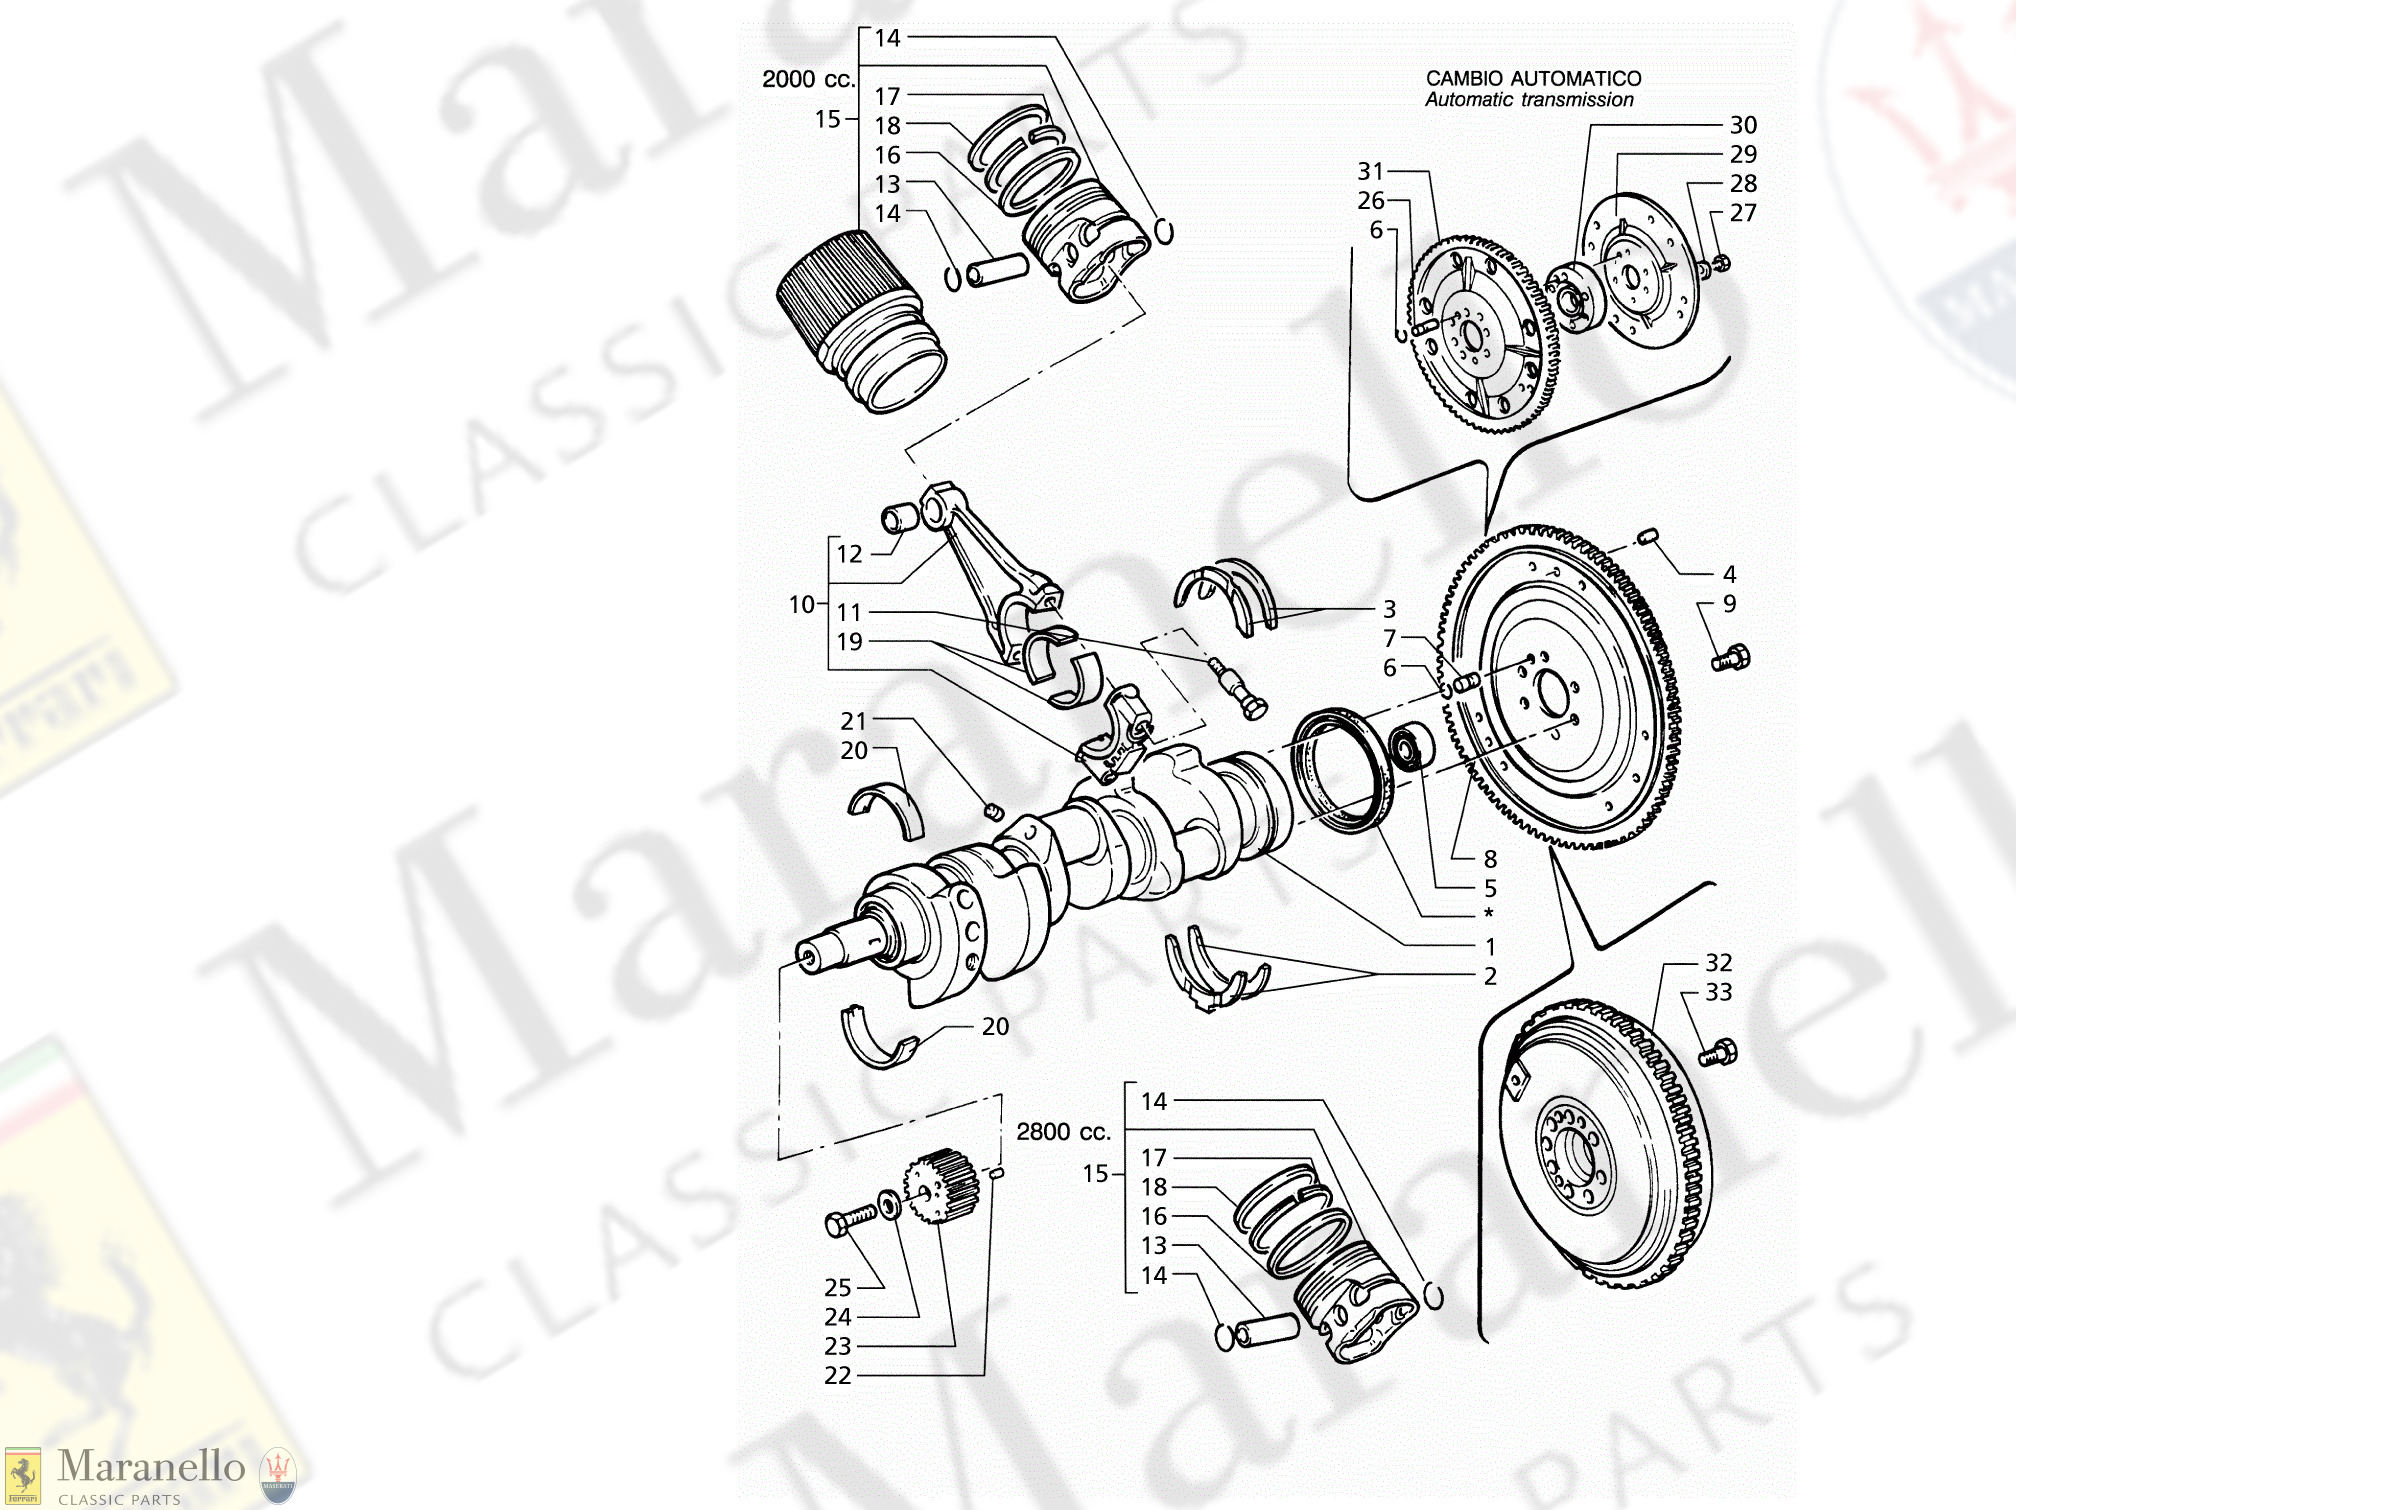 C 5 - Crankshaft, Pistons, Connecting Rods And Flywheel